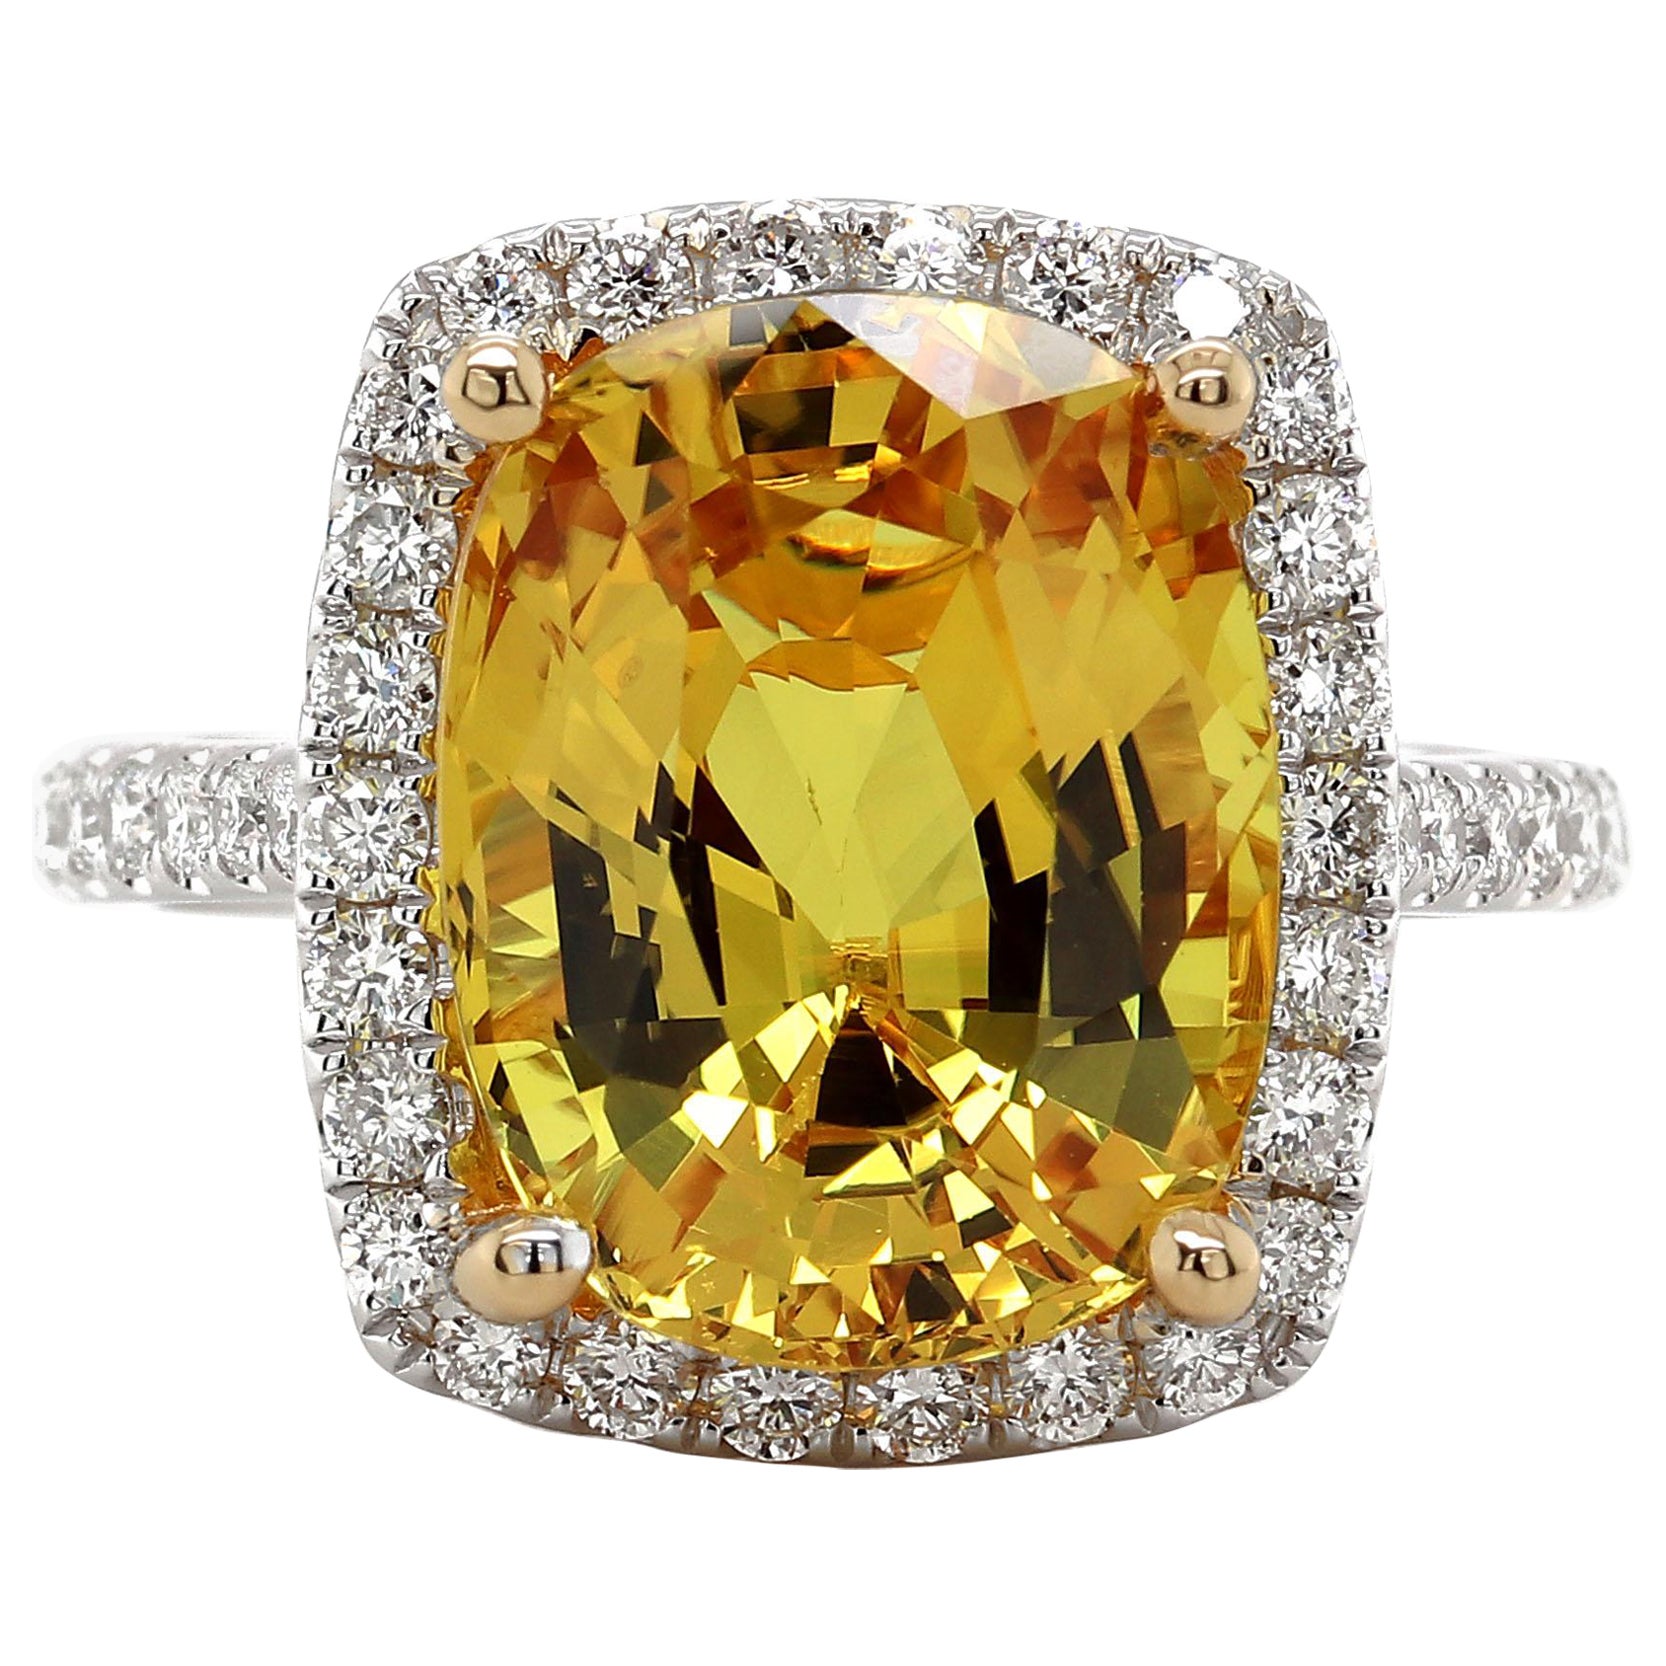 GIA 6.66 Carat Yellow Sapphire Ring in 18k White Gold